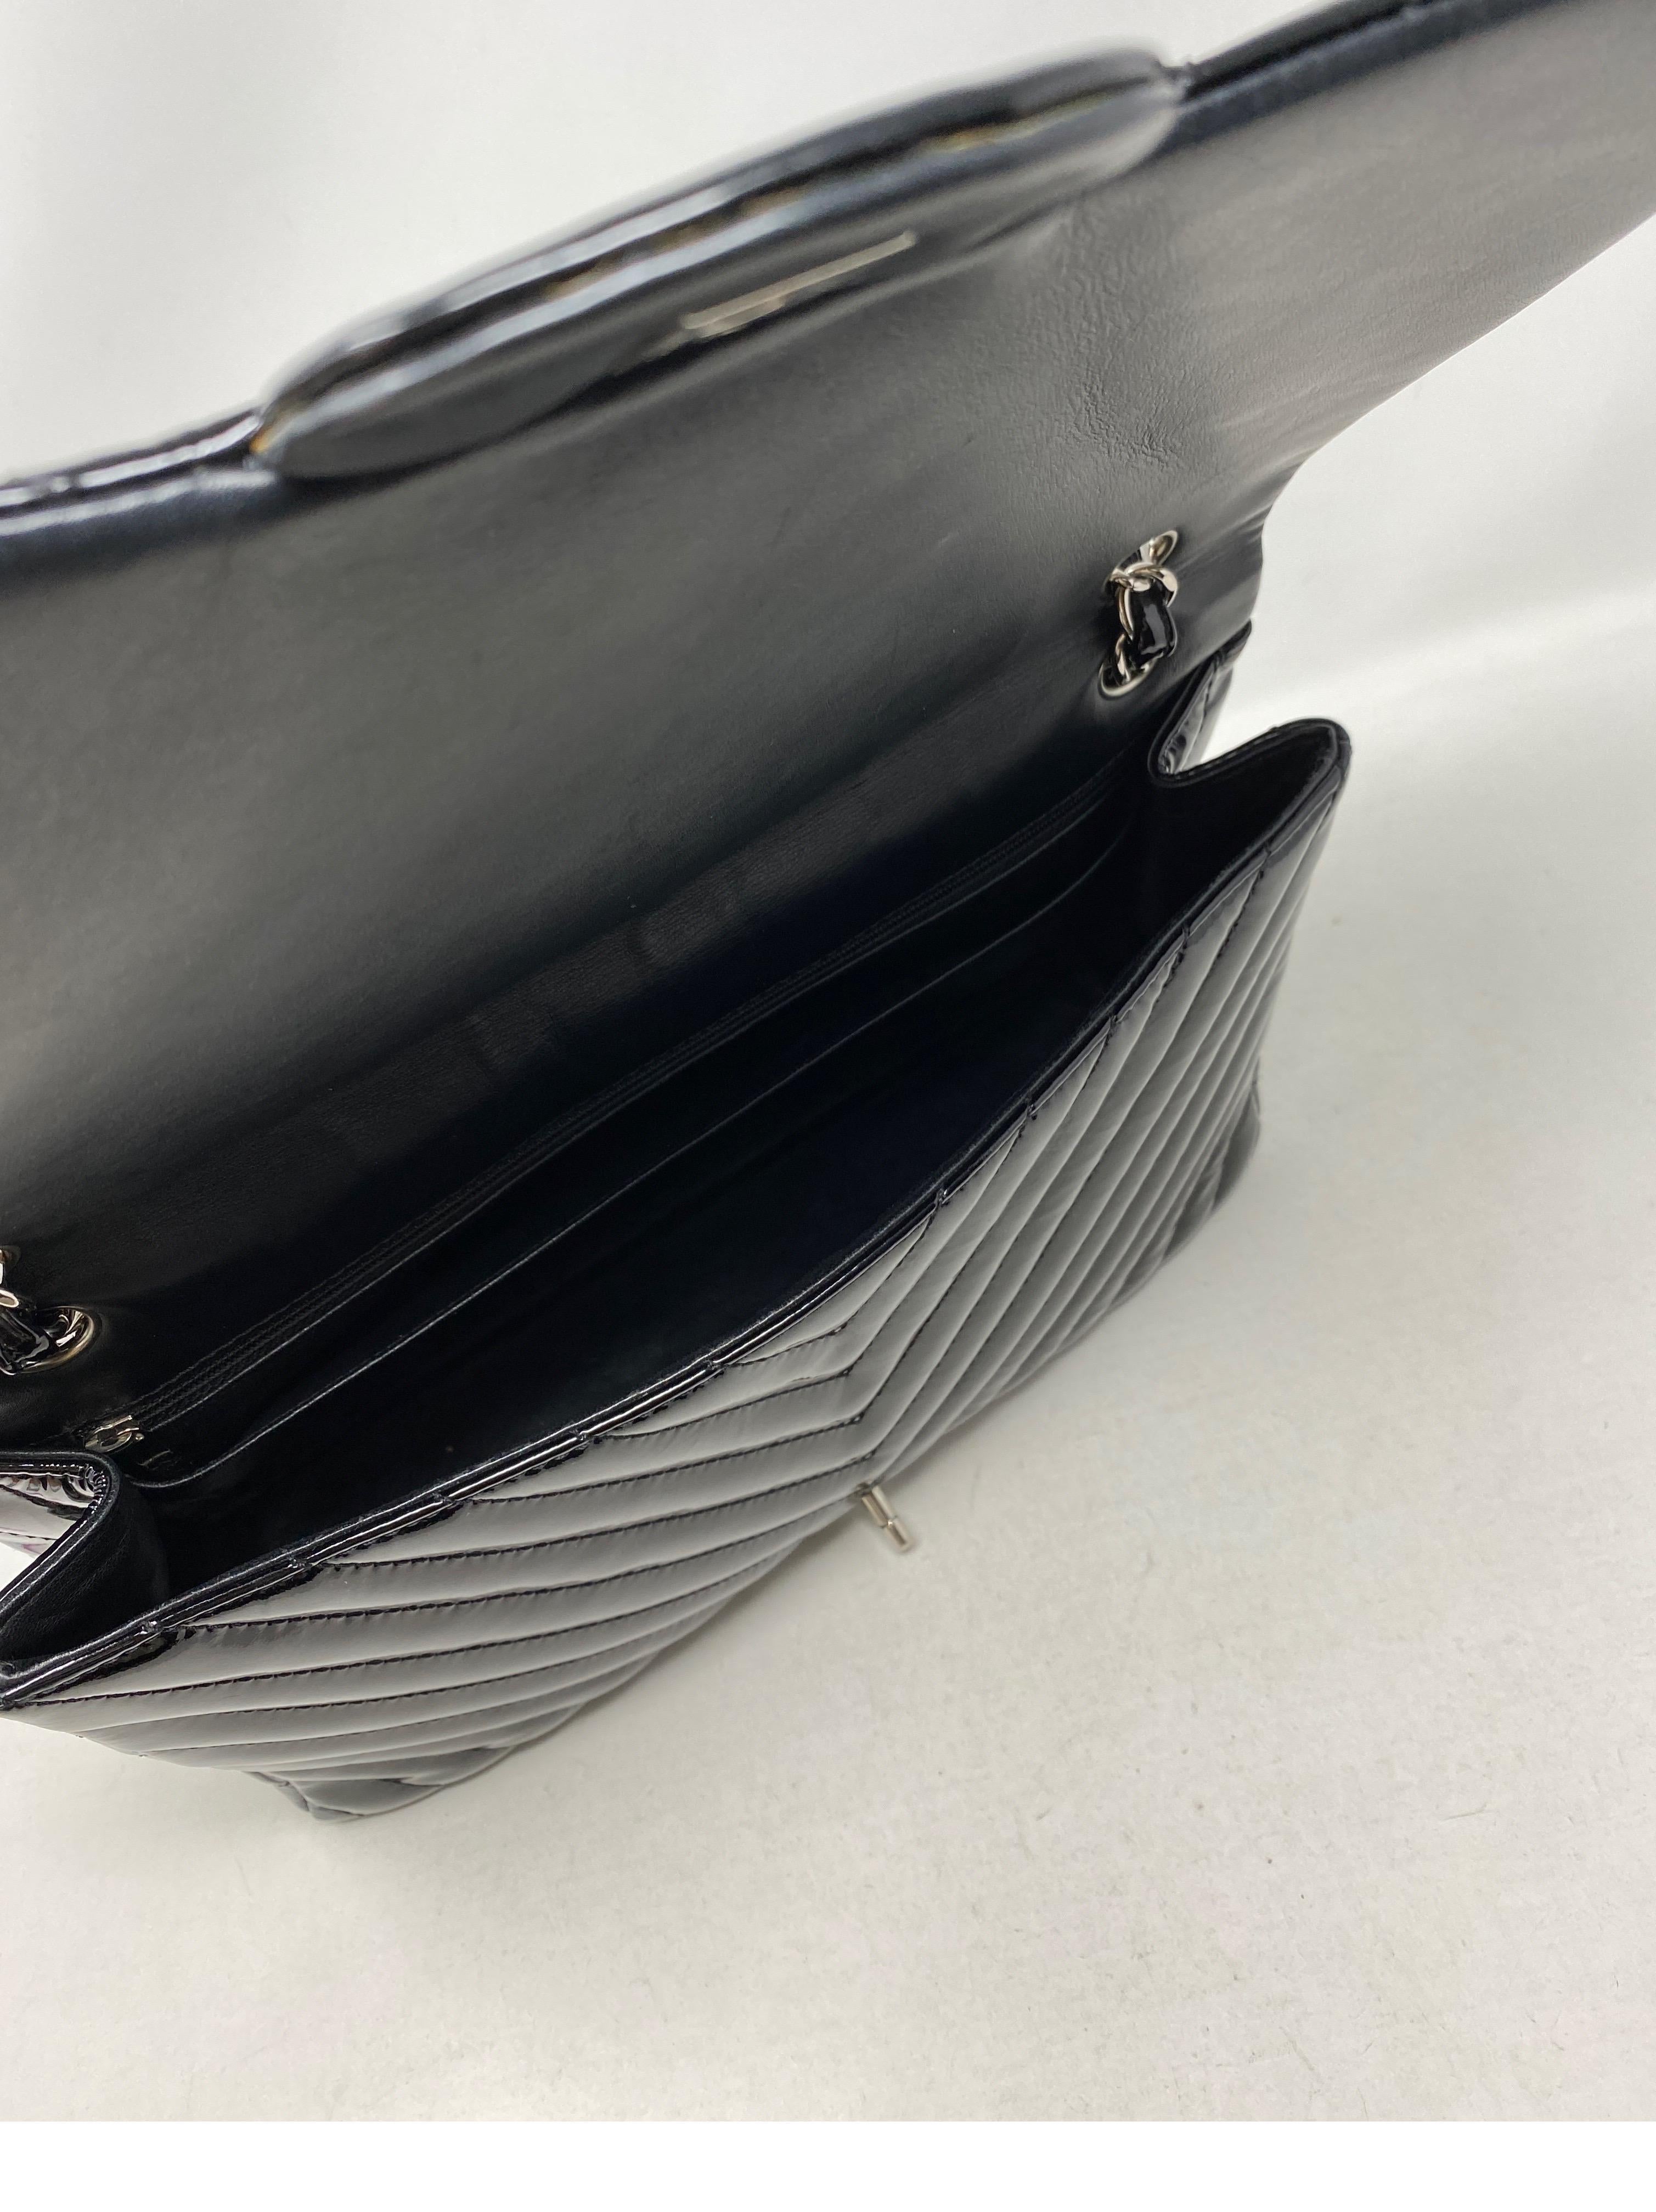 Chanel Black Jumbo Patent Leather Bag 10